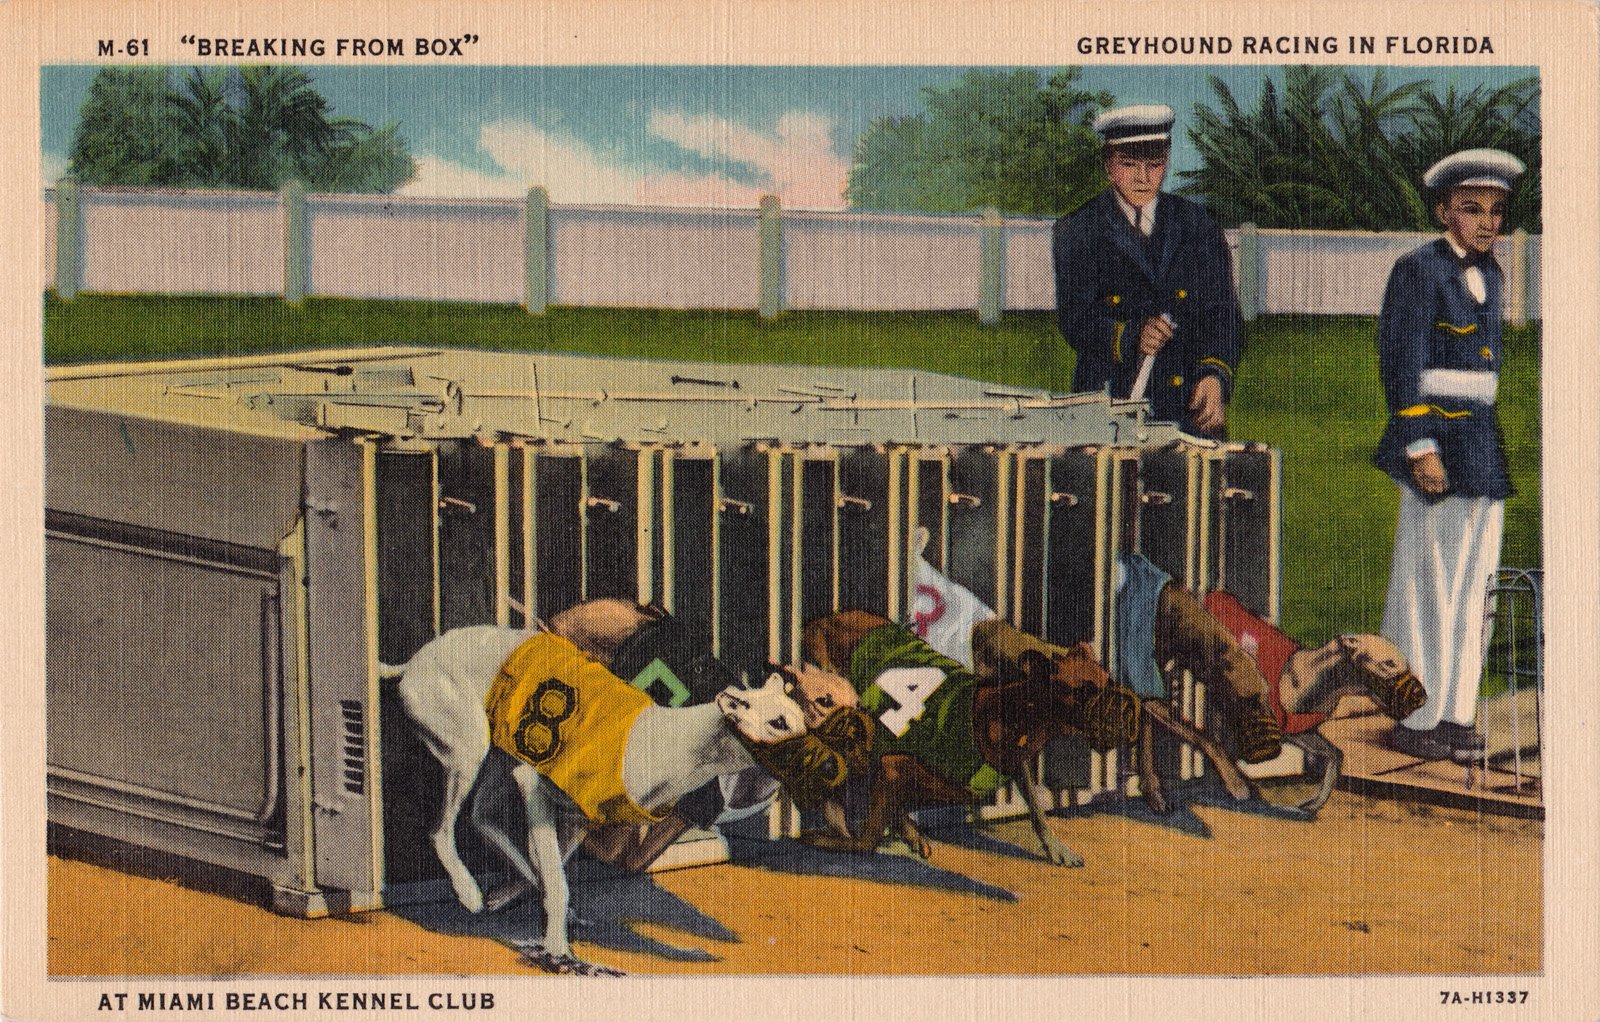 postcard, Paper, Poster, Advertising, Vintage, Retro, Antique, Dog, Dogs Wallpaper